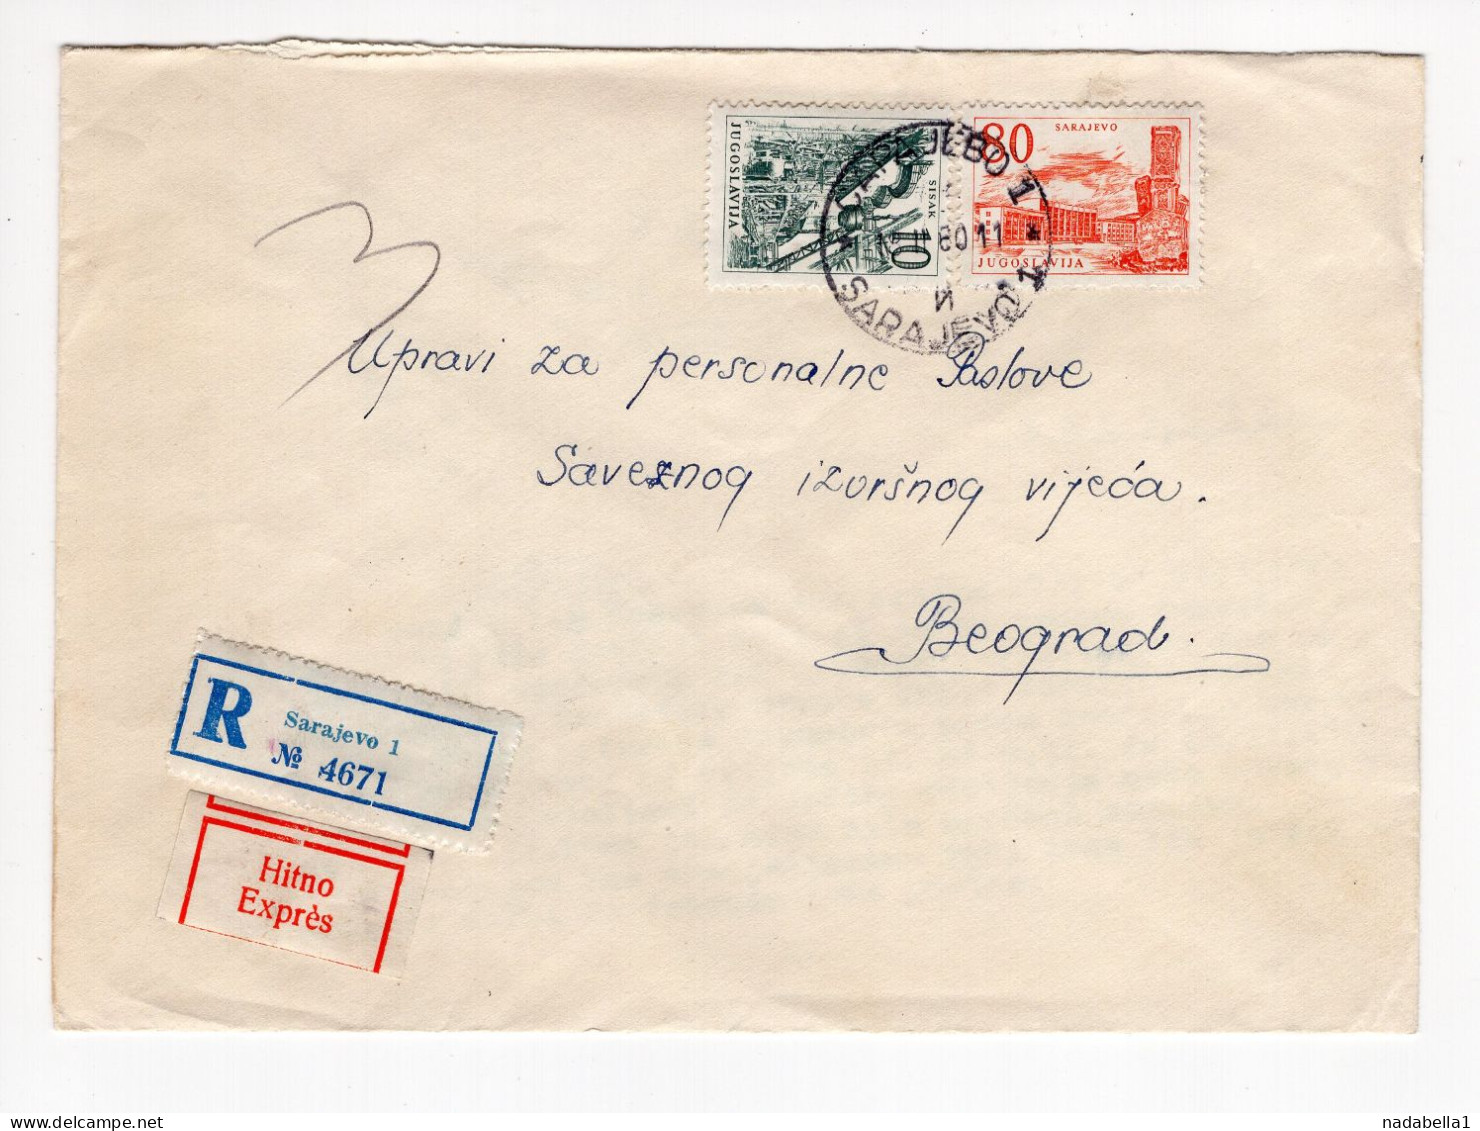 1960. YUGOSLAVIA,BOSNIA,SARAJEVO,TPO 4 SARAJEVO - BEOGRAD,RECORDED,EXPRESS COVER - Lettres & Documents